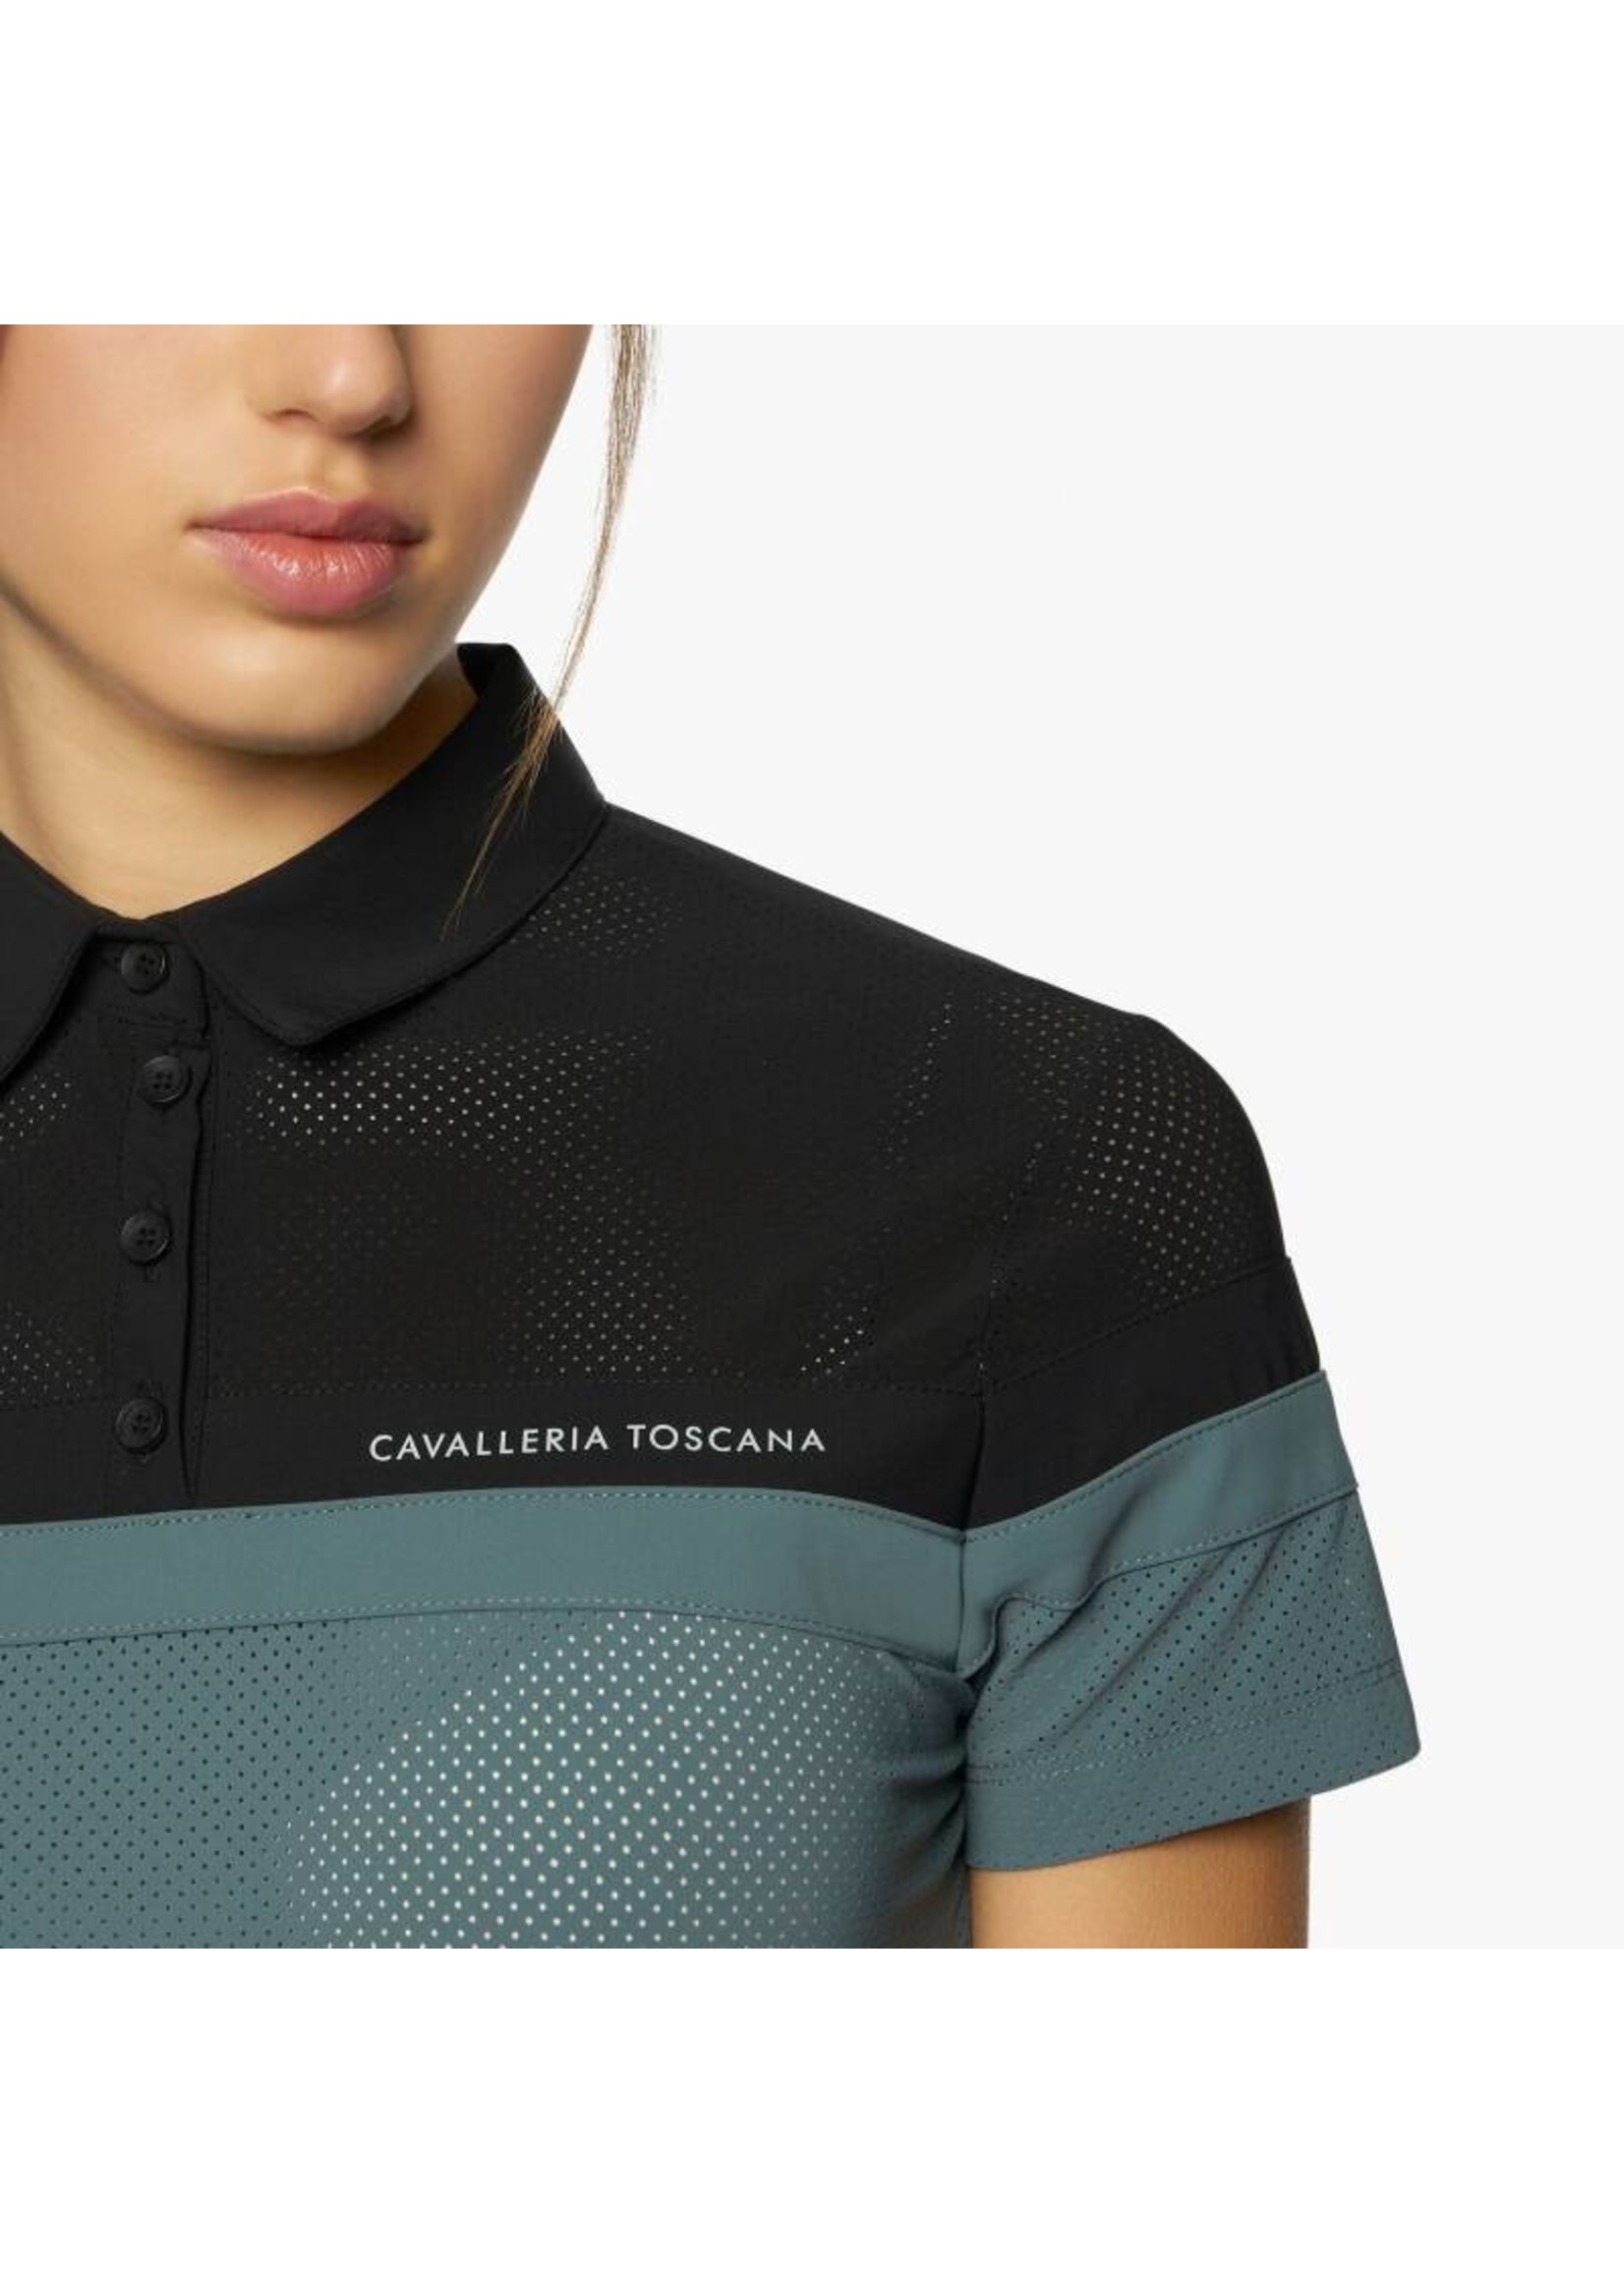 Cavalleria Toscana Cavalleria toscana women's two-tone perforated jersey polo shirt